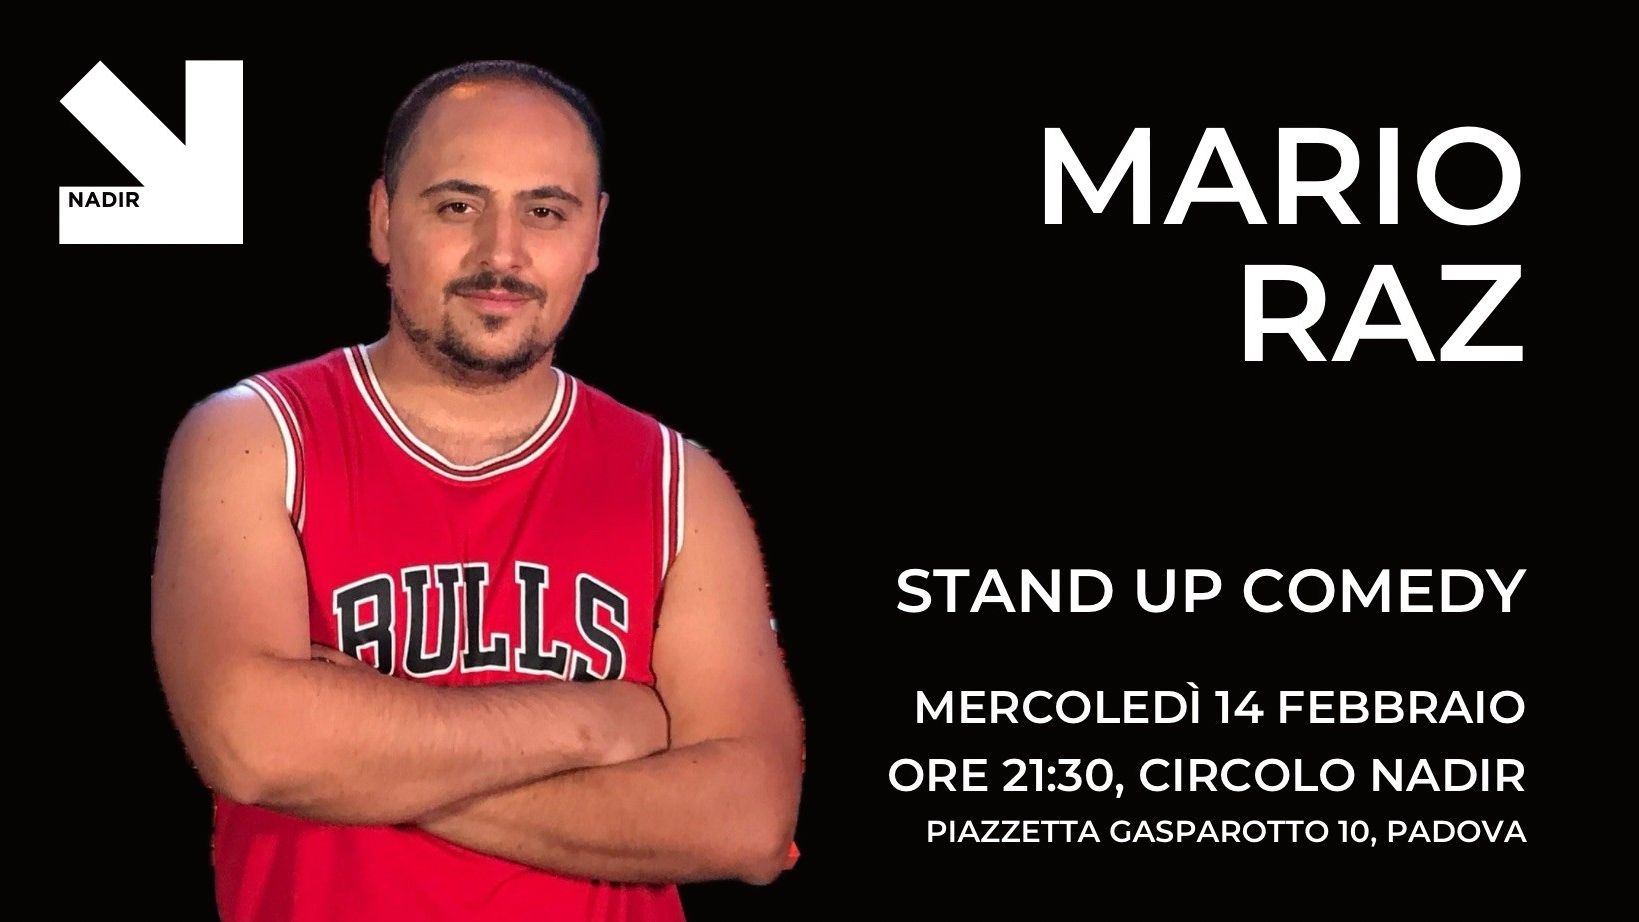 Mario Raz - Stand up comedy